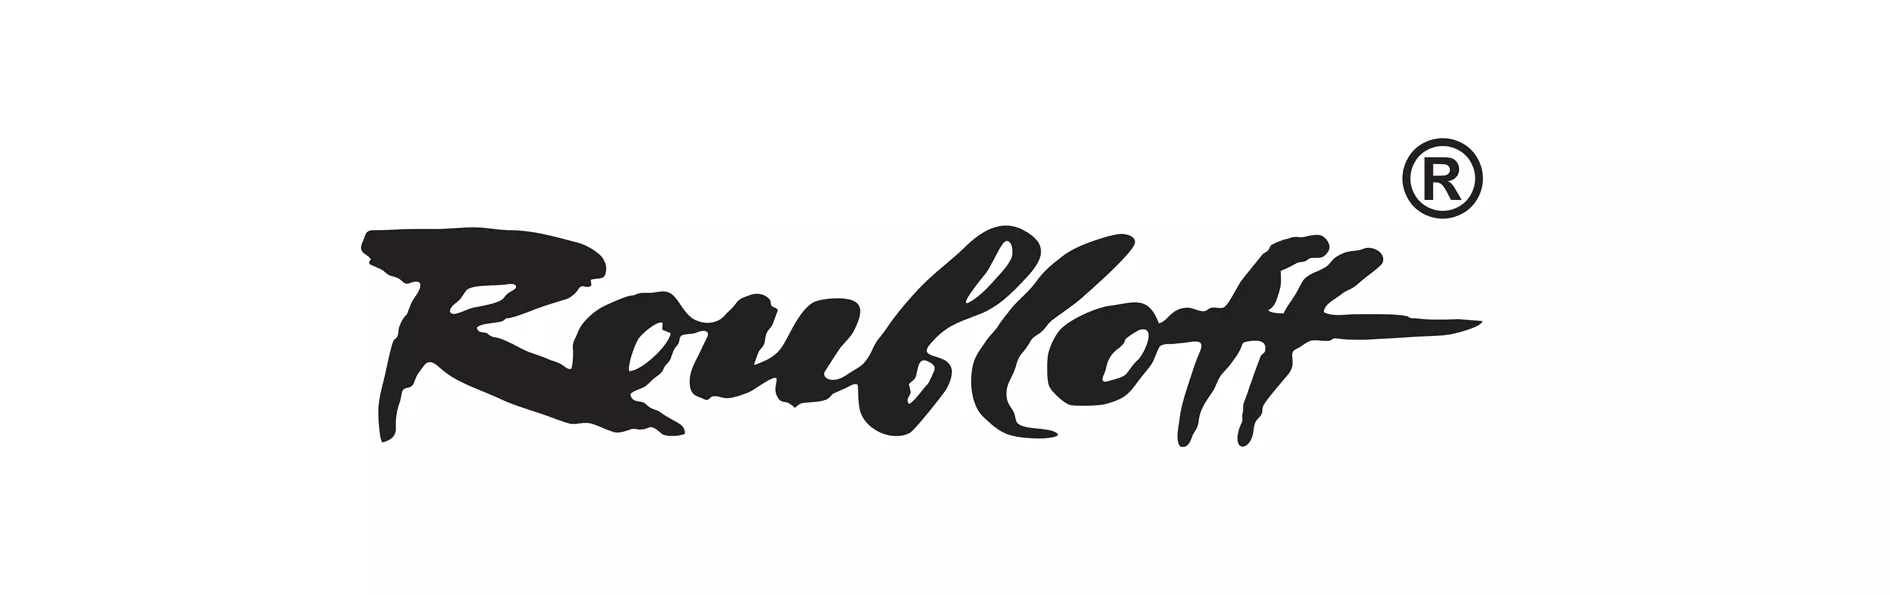 Roubloff logo